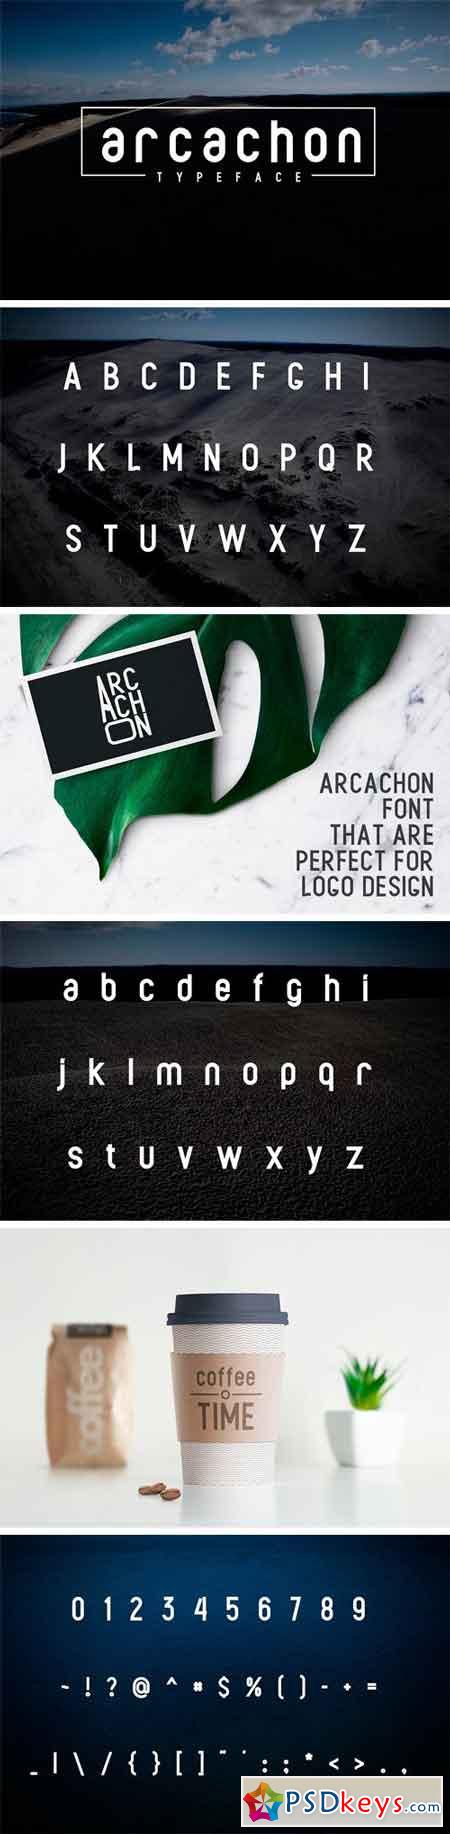 Arcachon Typeface 1805017